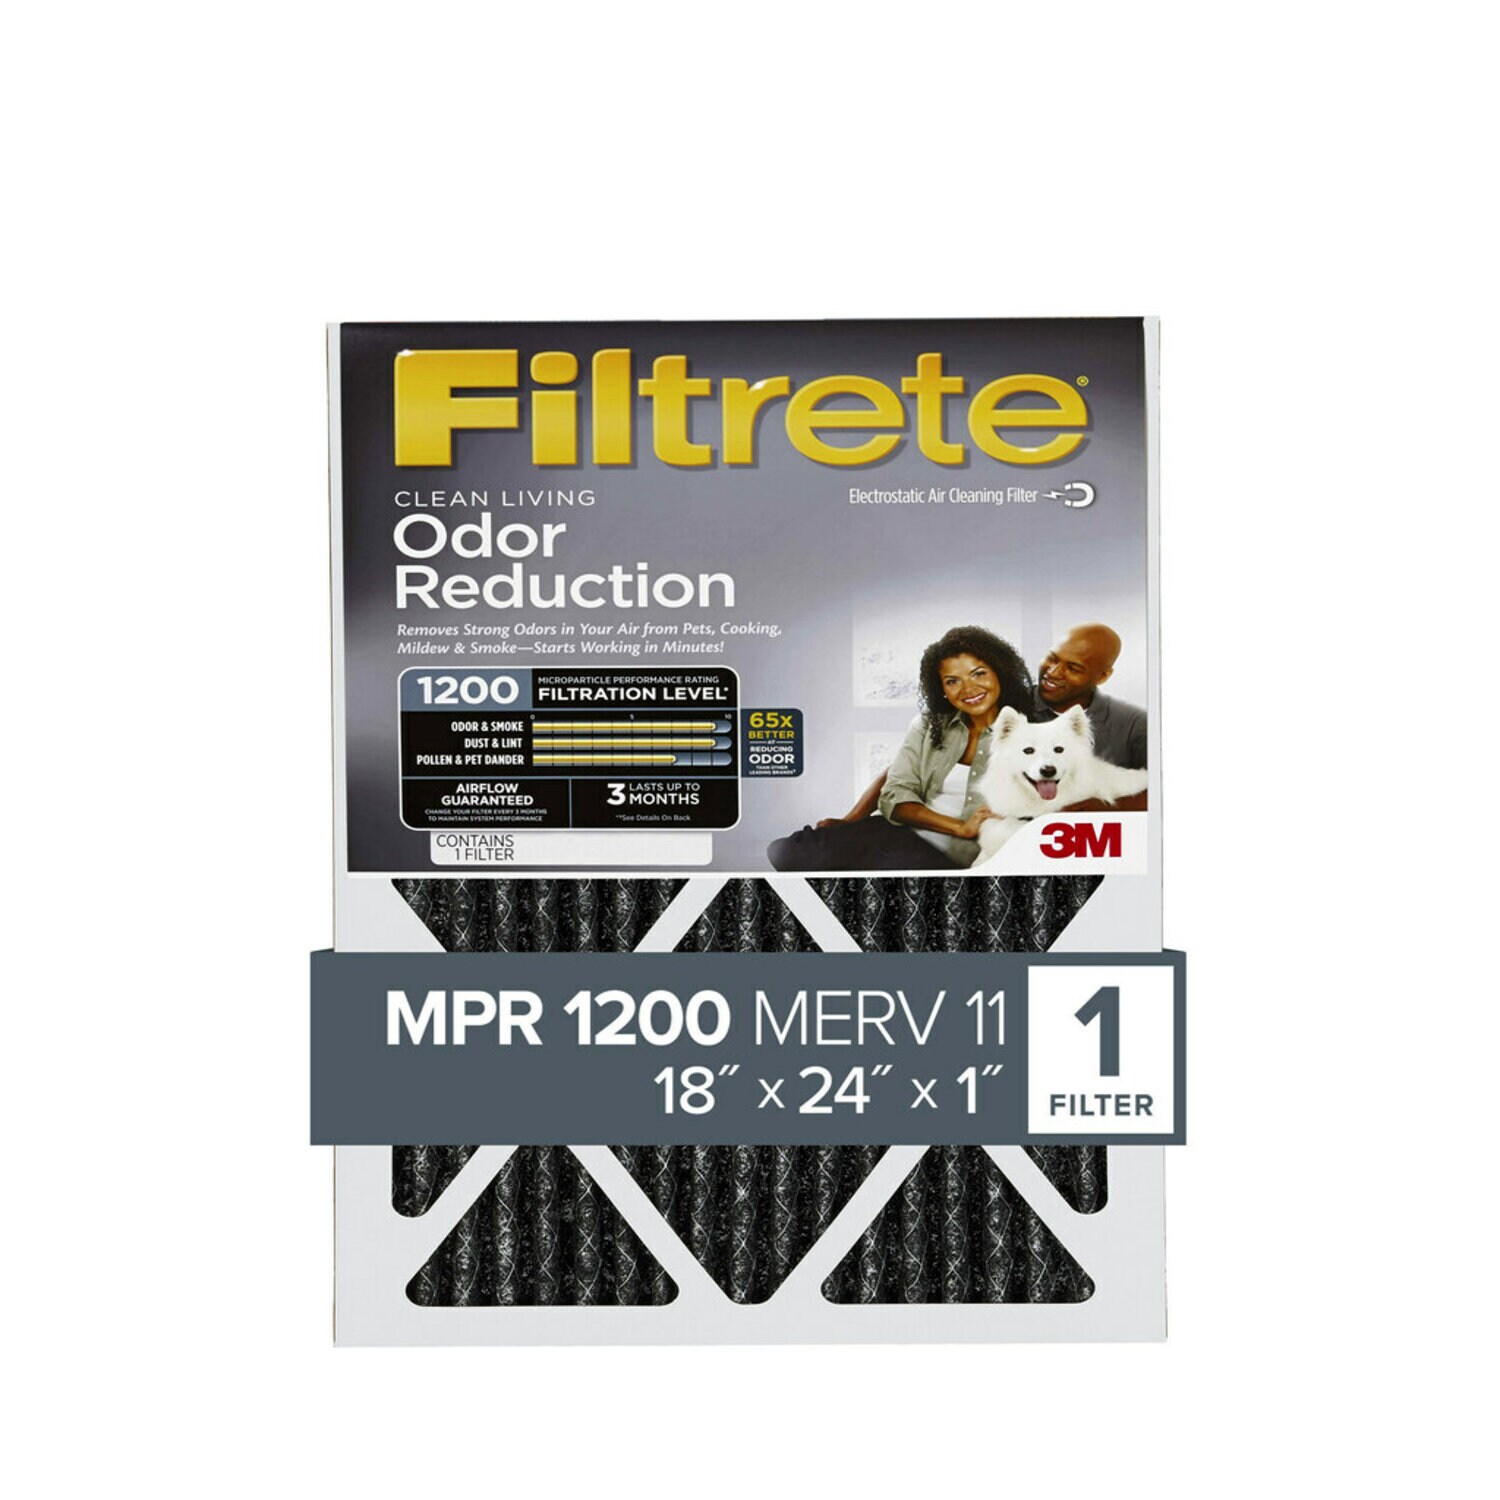 7010332612 - Filtrete Home Odor Reduction Filter HOME21-4, 18 in x 24 in x 1 in
(45,7 cm x 60,9 cm x 2,5 cm)